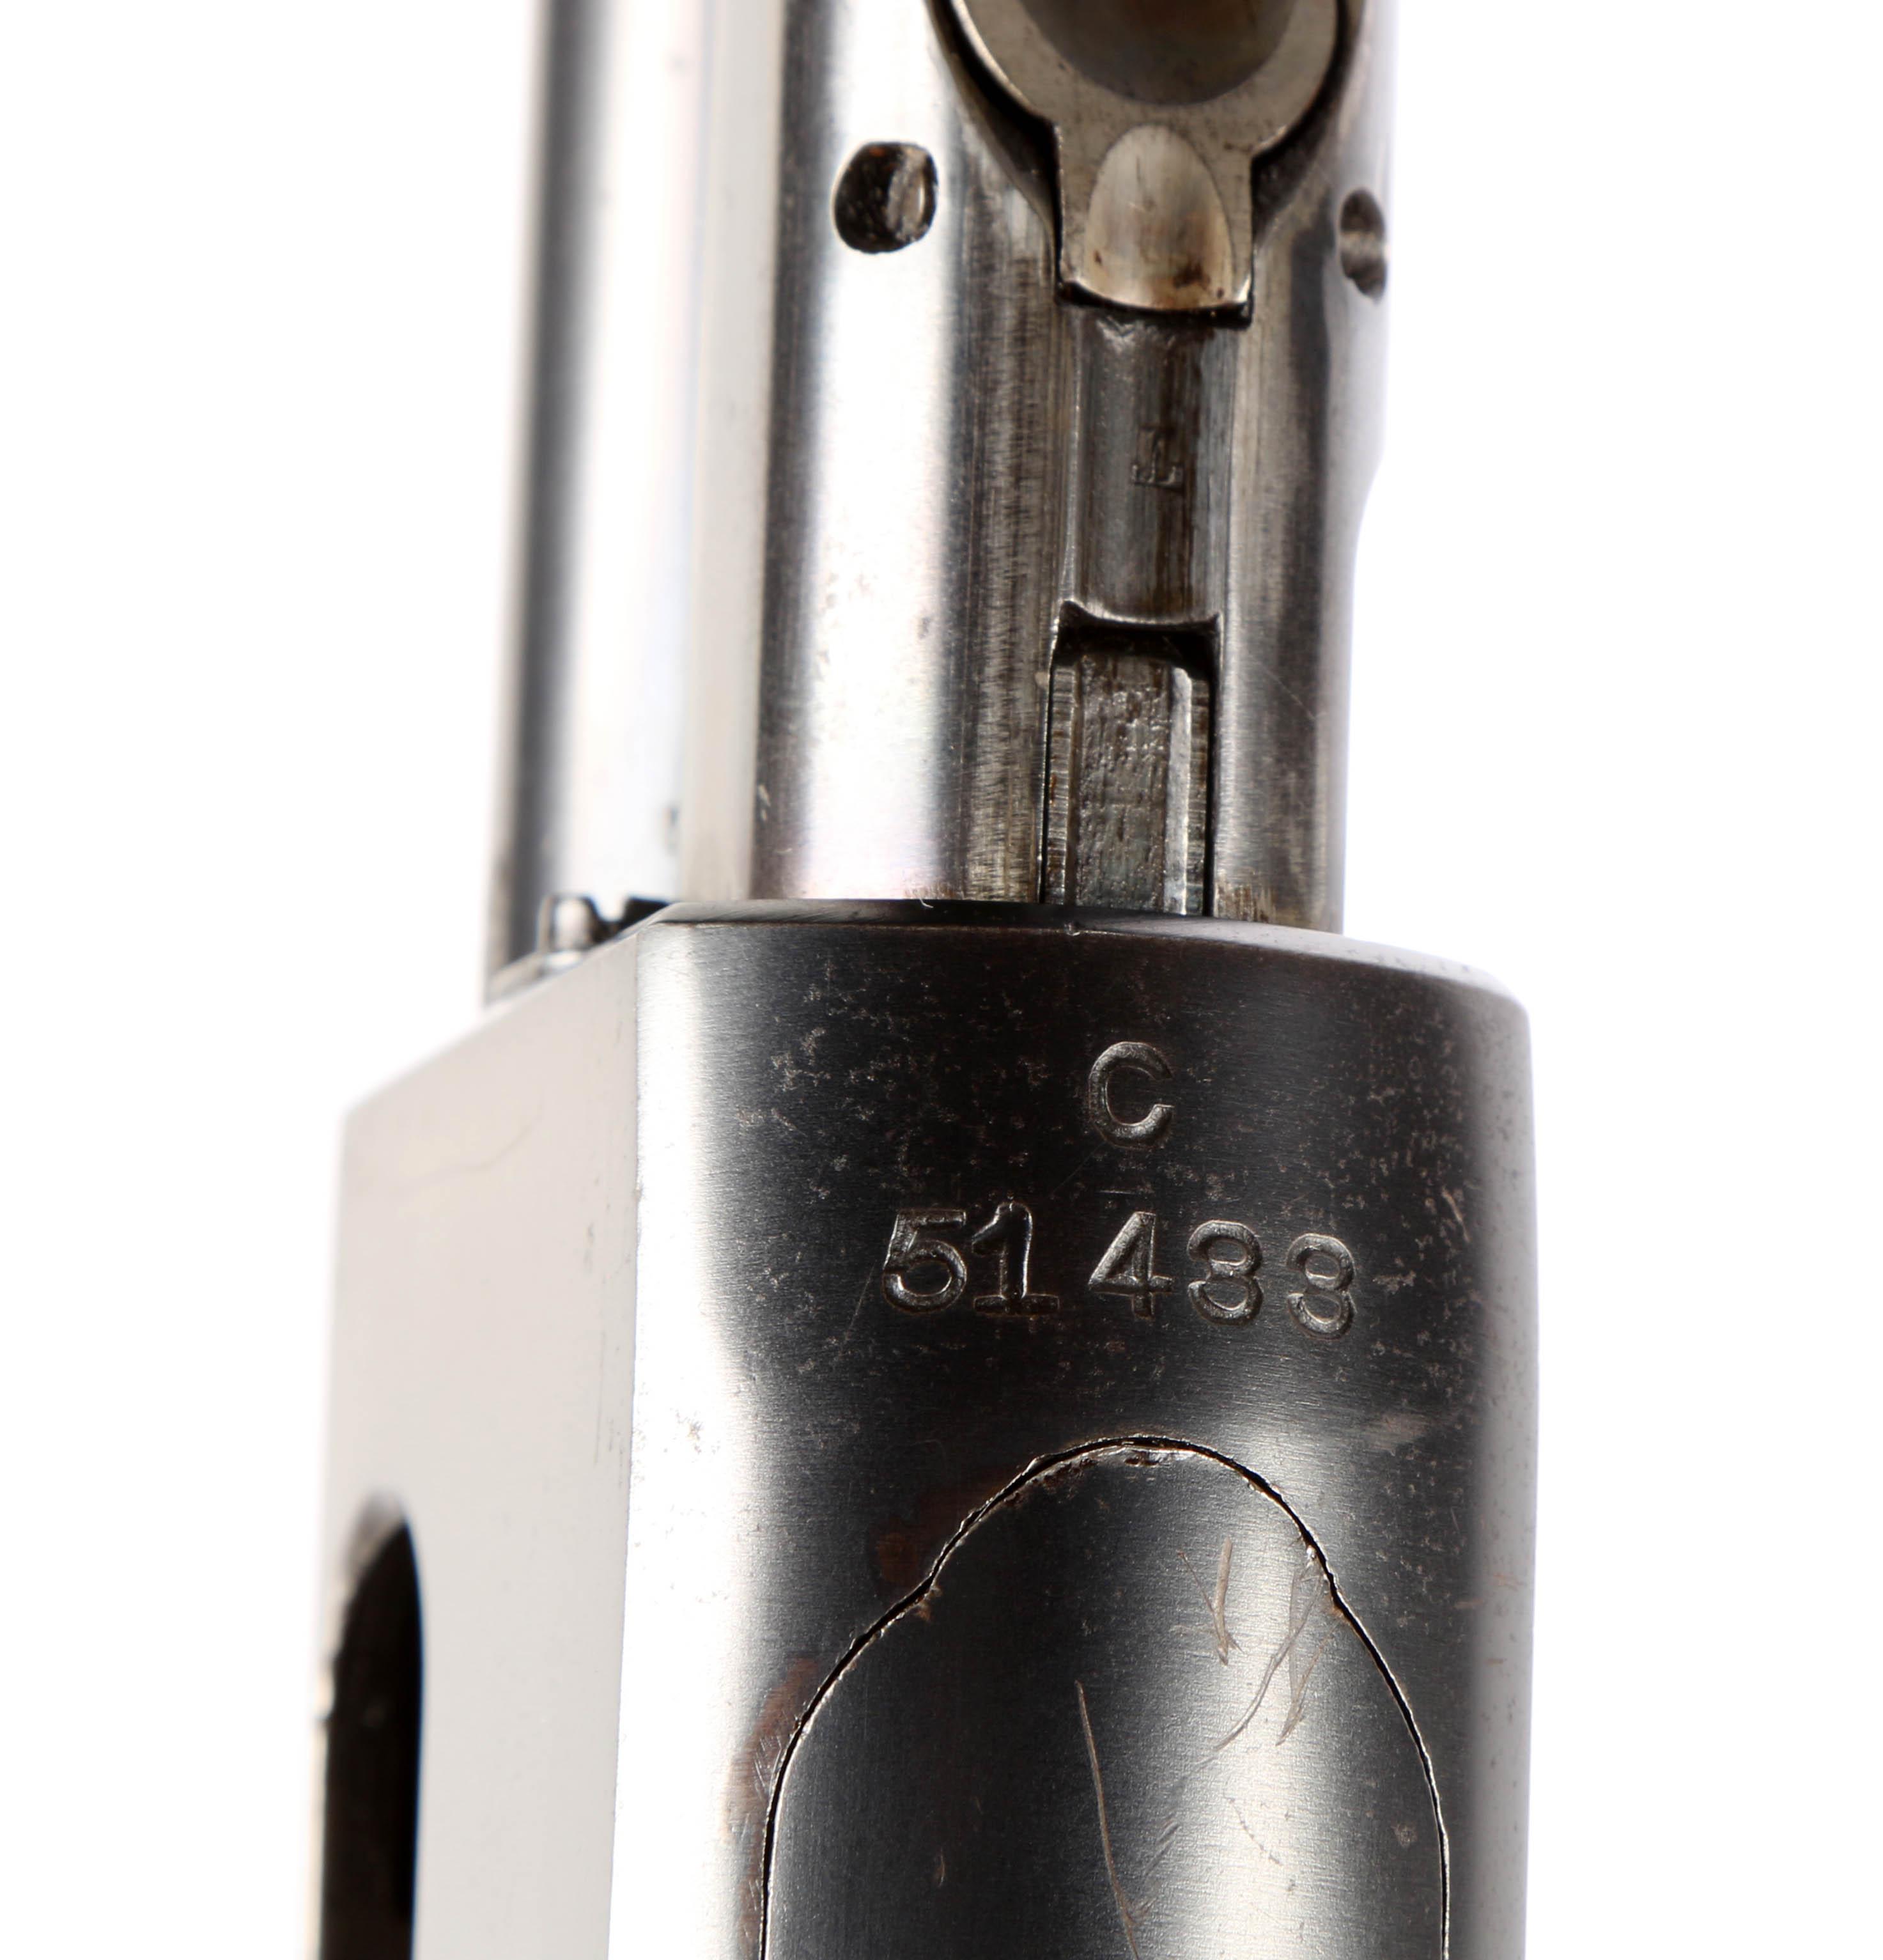 Remington Model 14 in .30 Rem Caliber